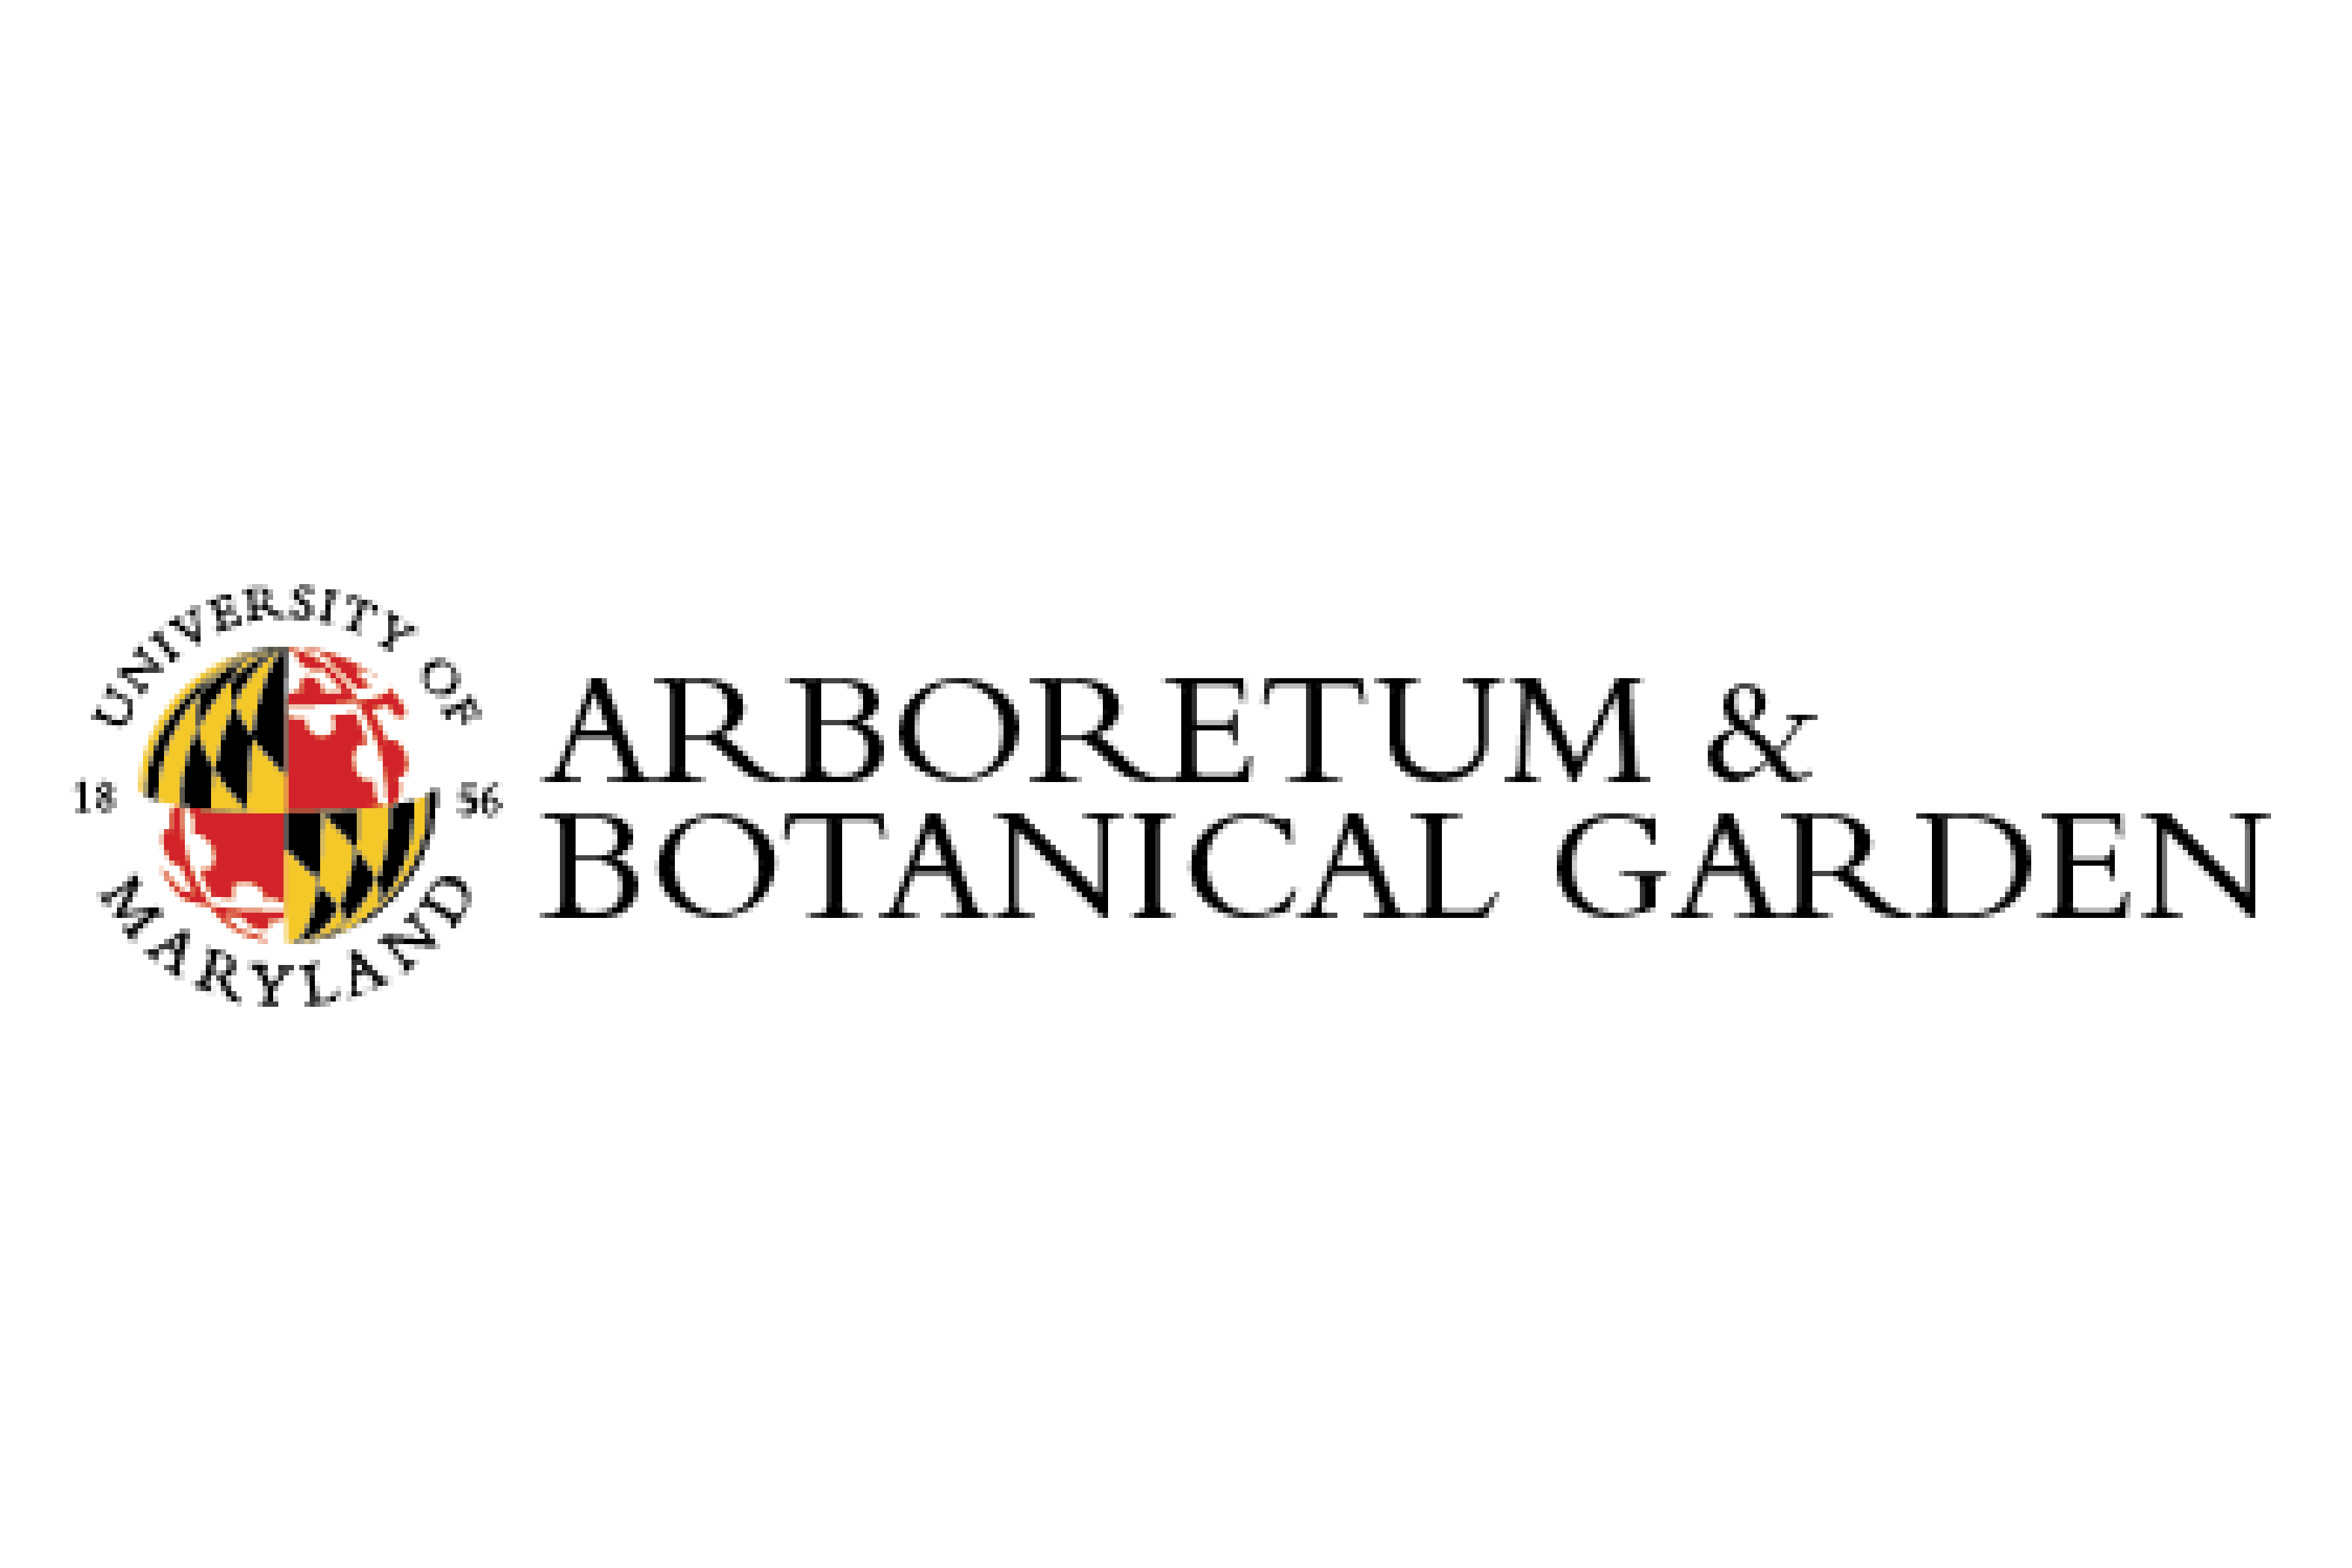 UMD Arboretum and Botanical Garden